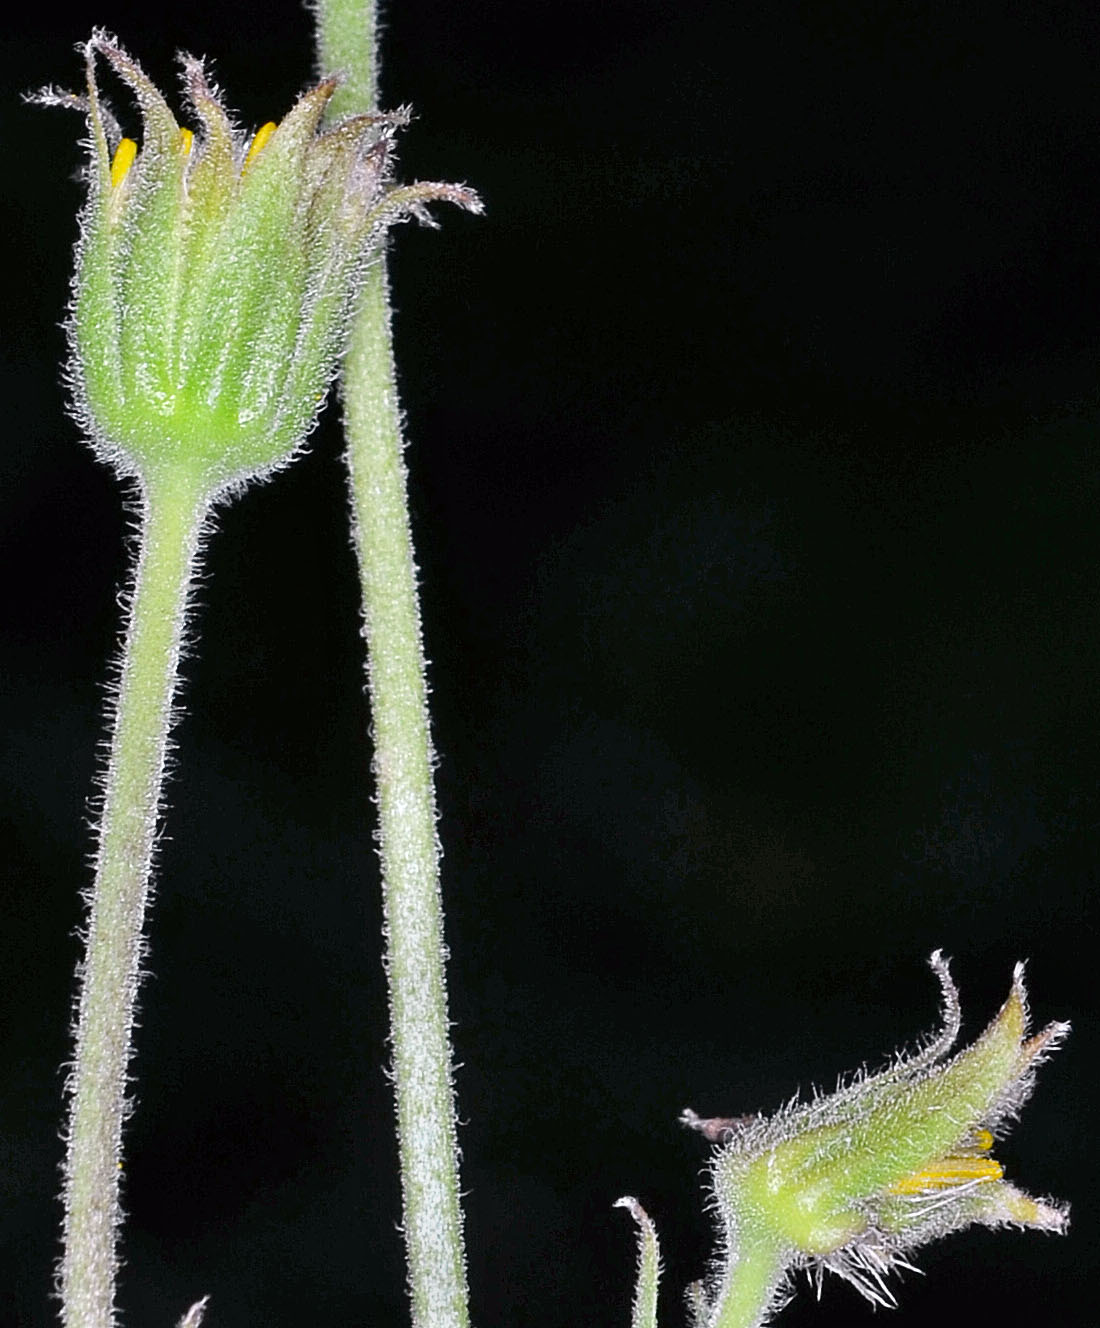 Flora of Eastern Washington Image: Arnica chamissonis